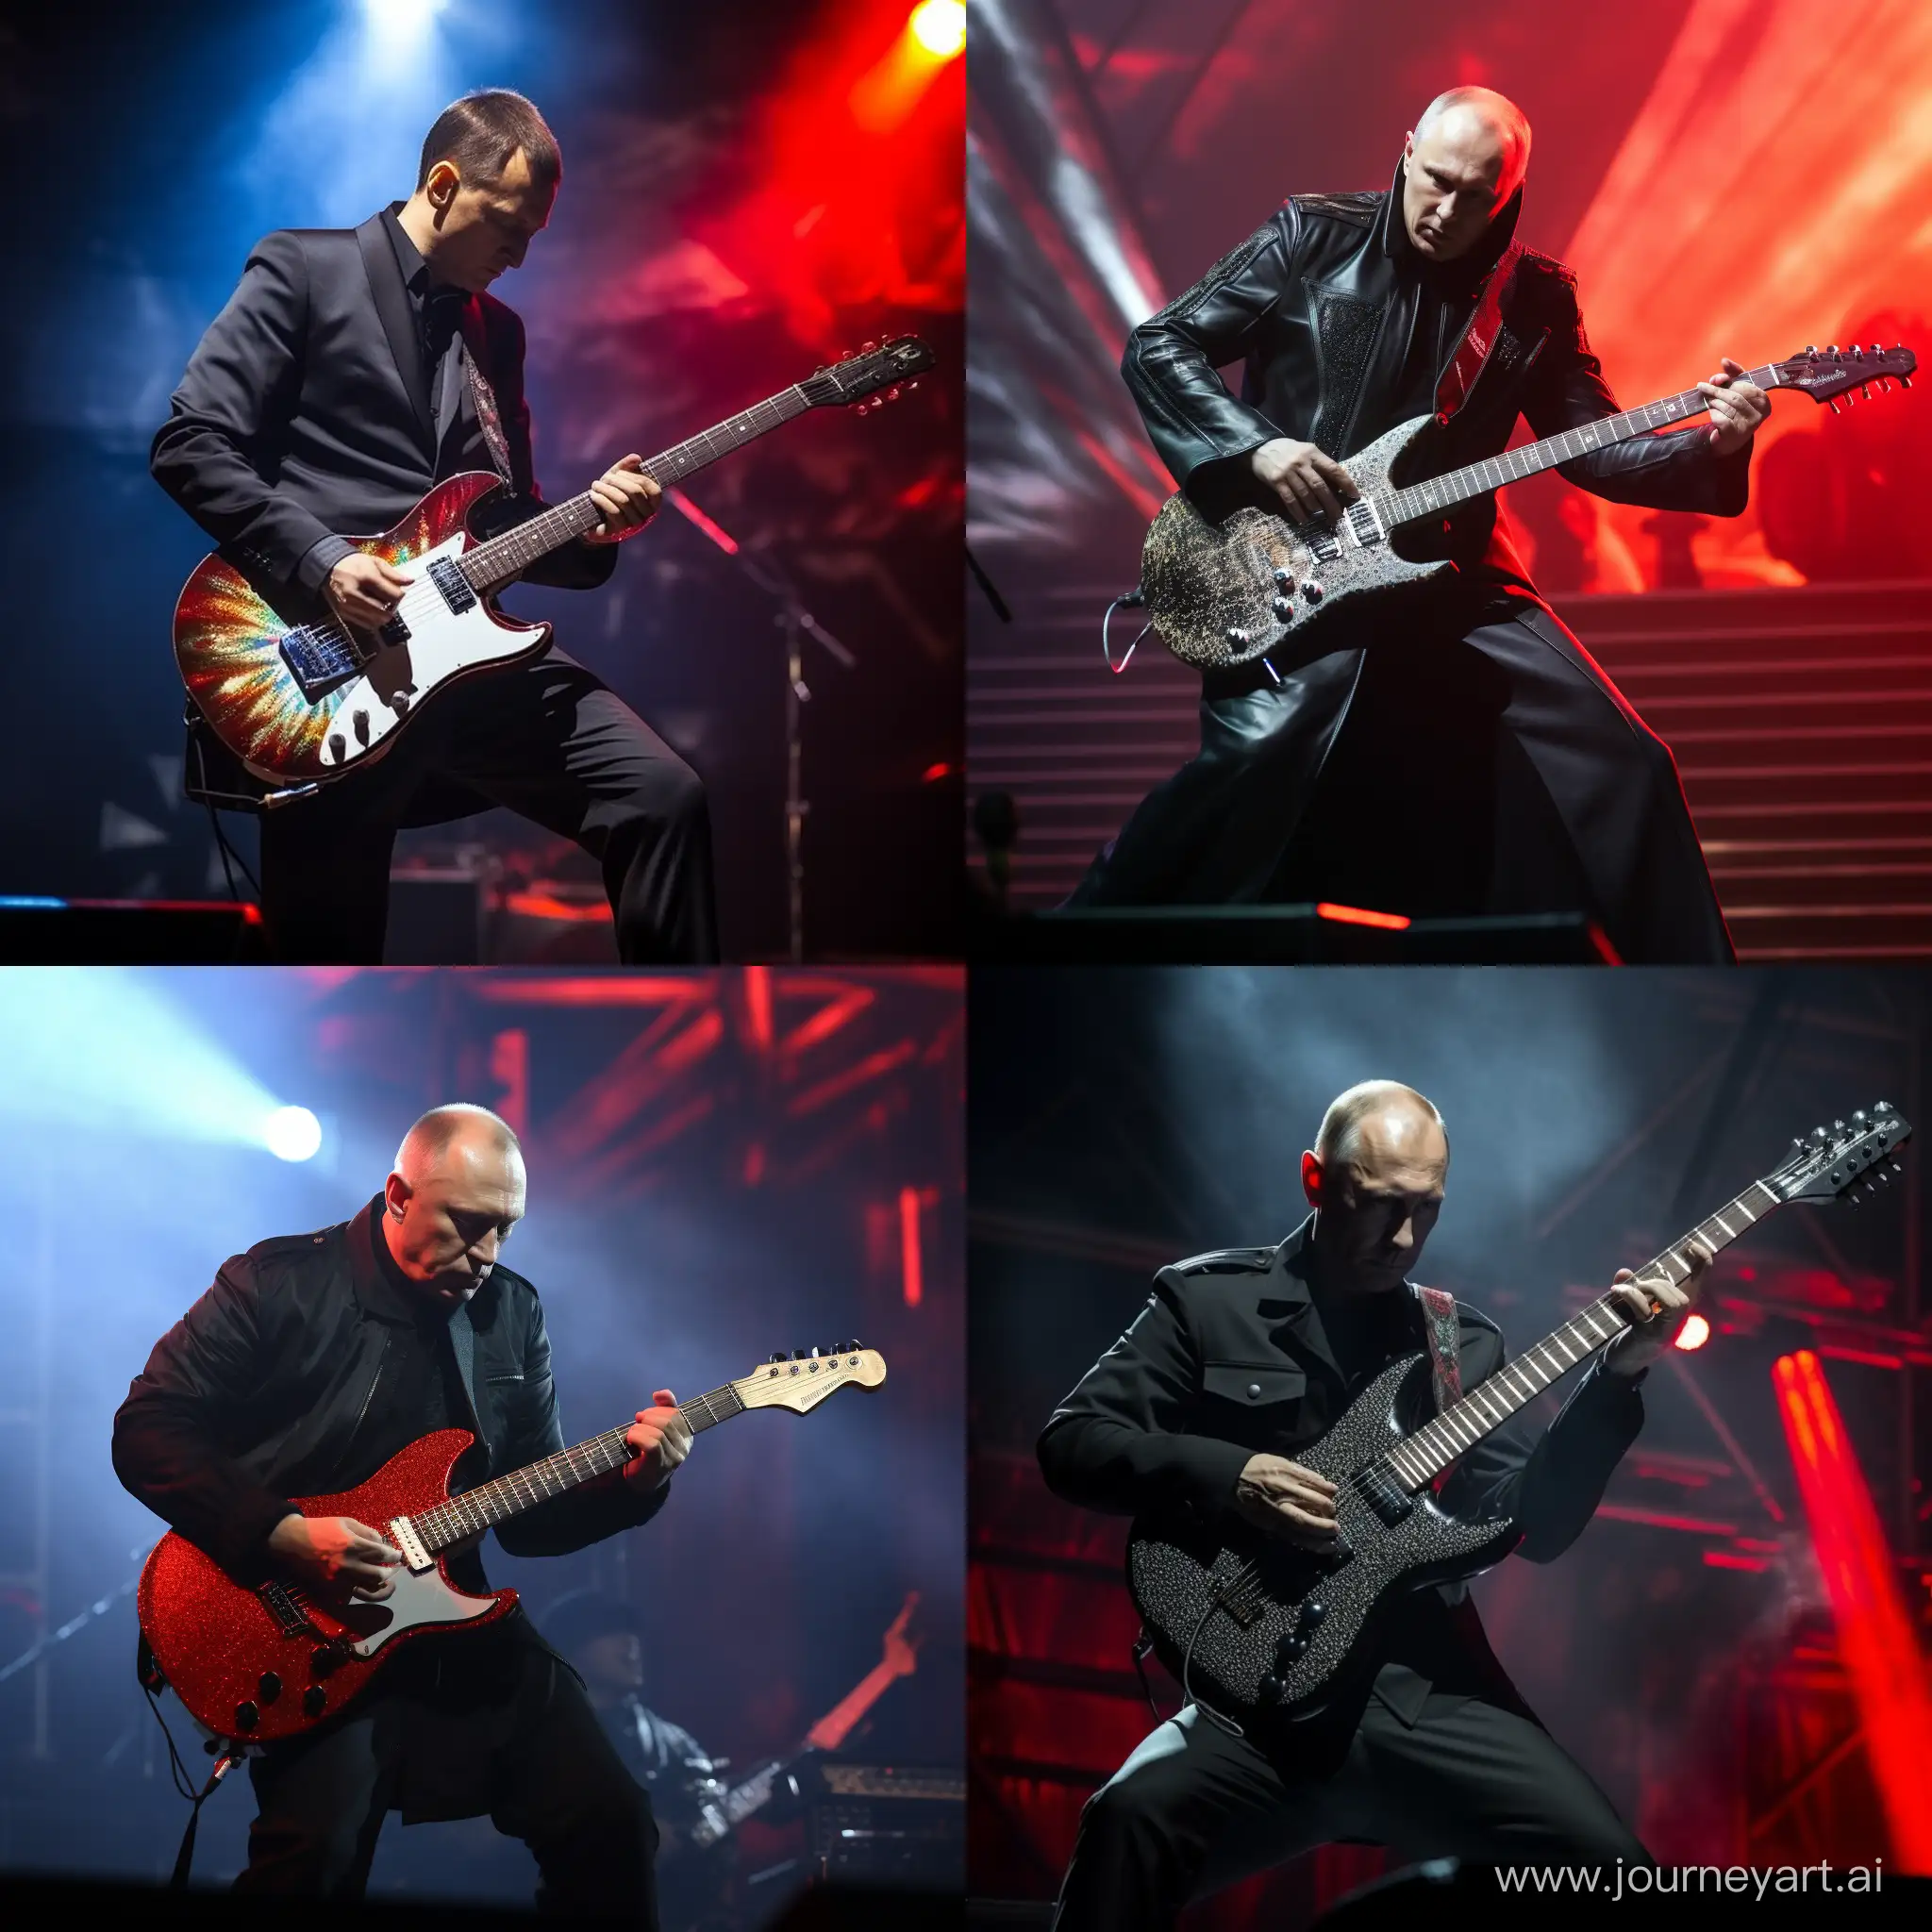 Путин Владимир Rockstar Guitar Performance on Stage, реальное фото